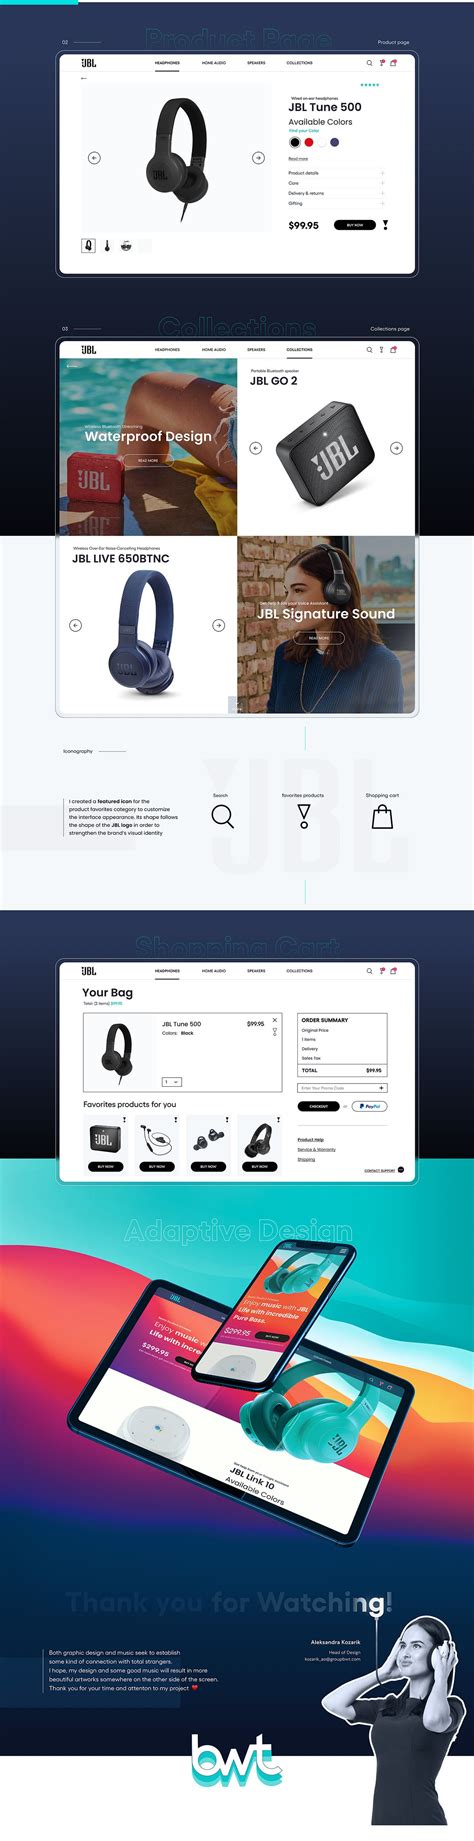 GIVENCHY服装网站界面设计|网页|电商|fly0327 - 临摹作品 - 站酷 (ZCOOL)